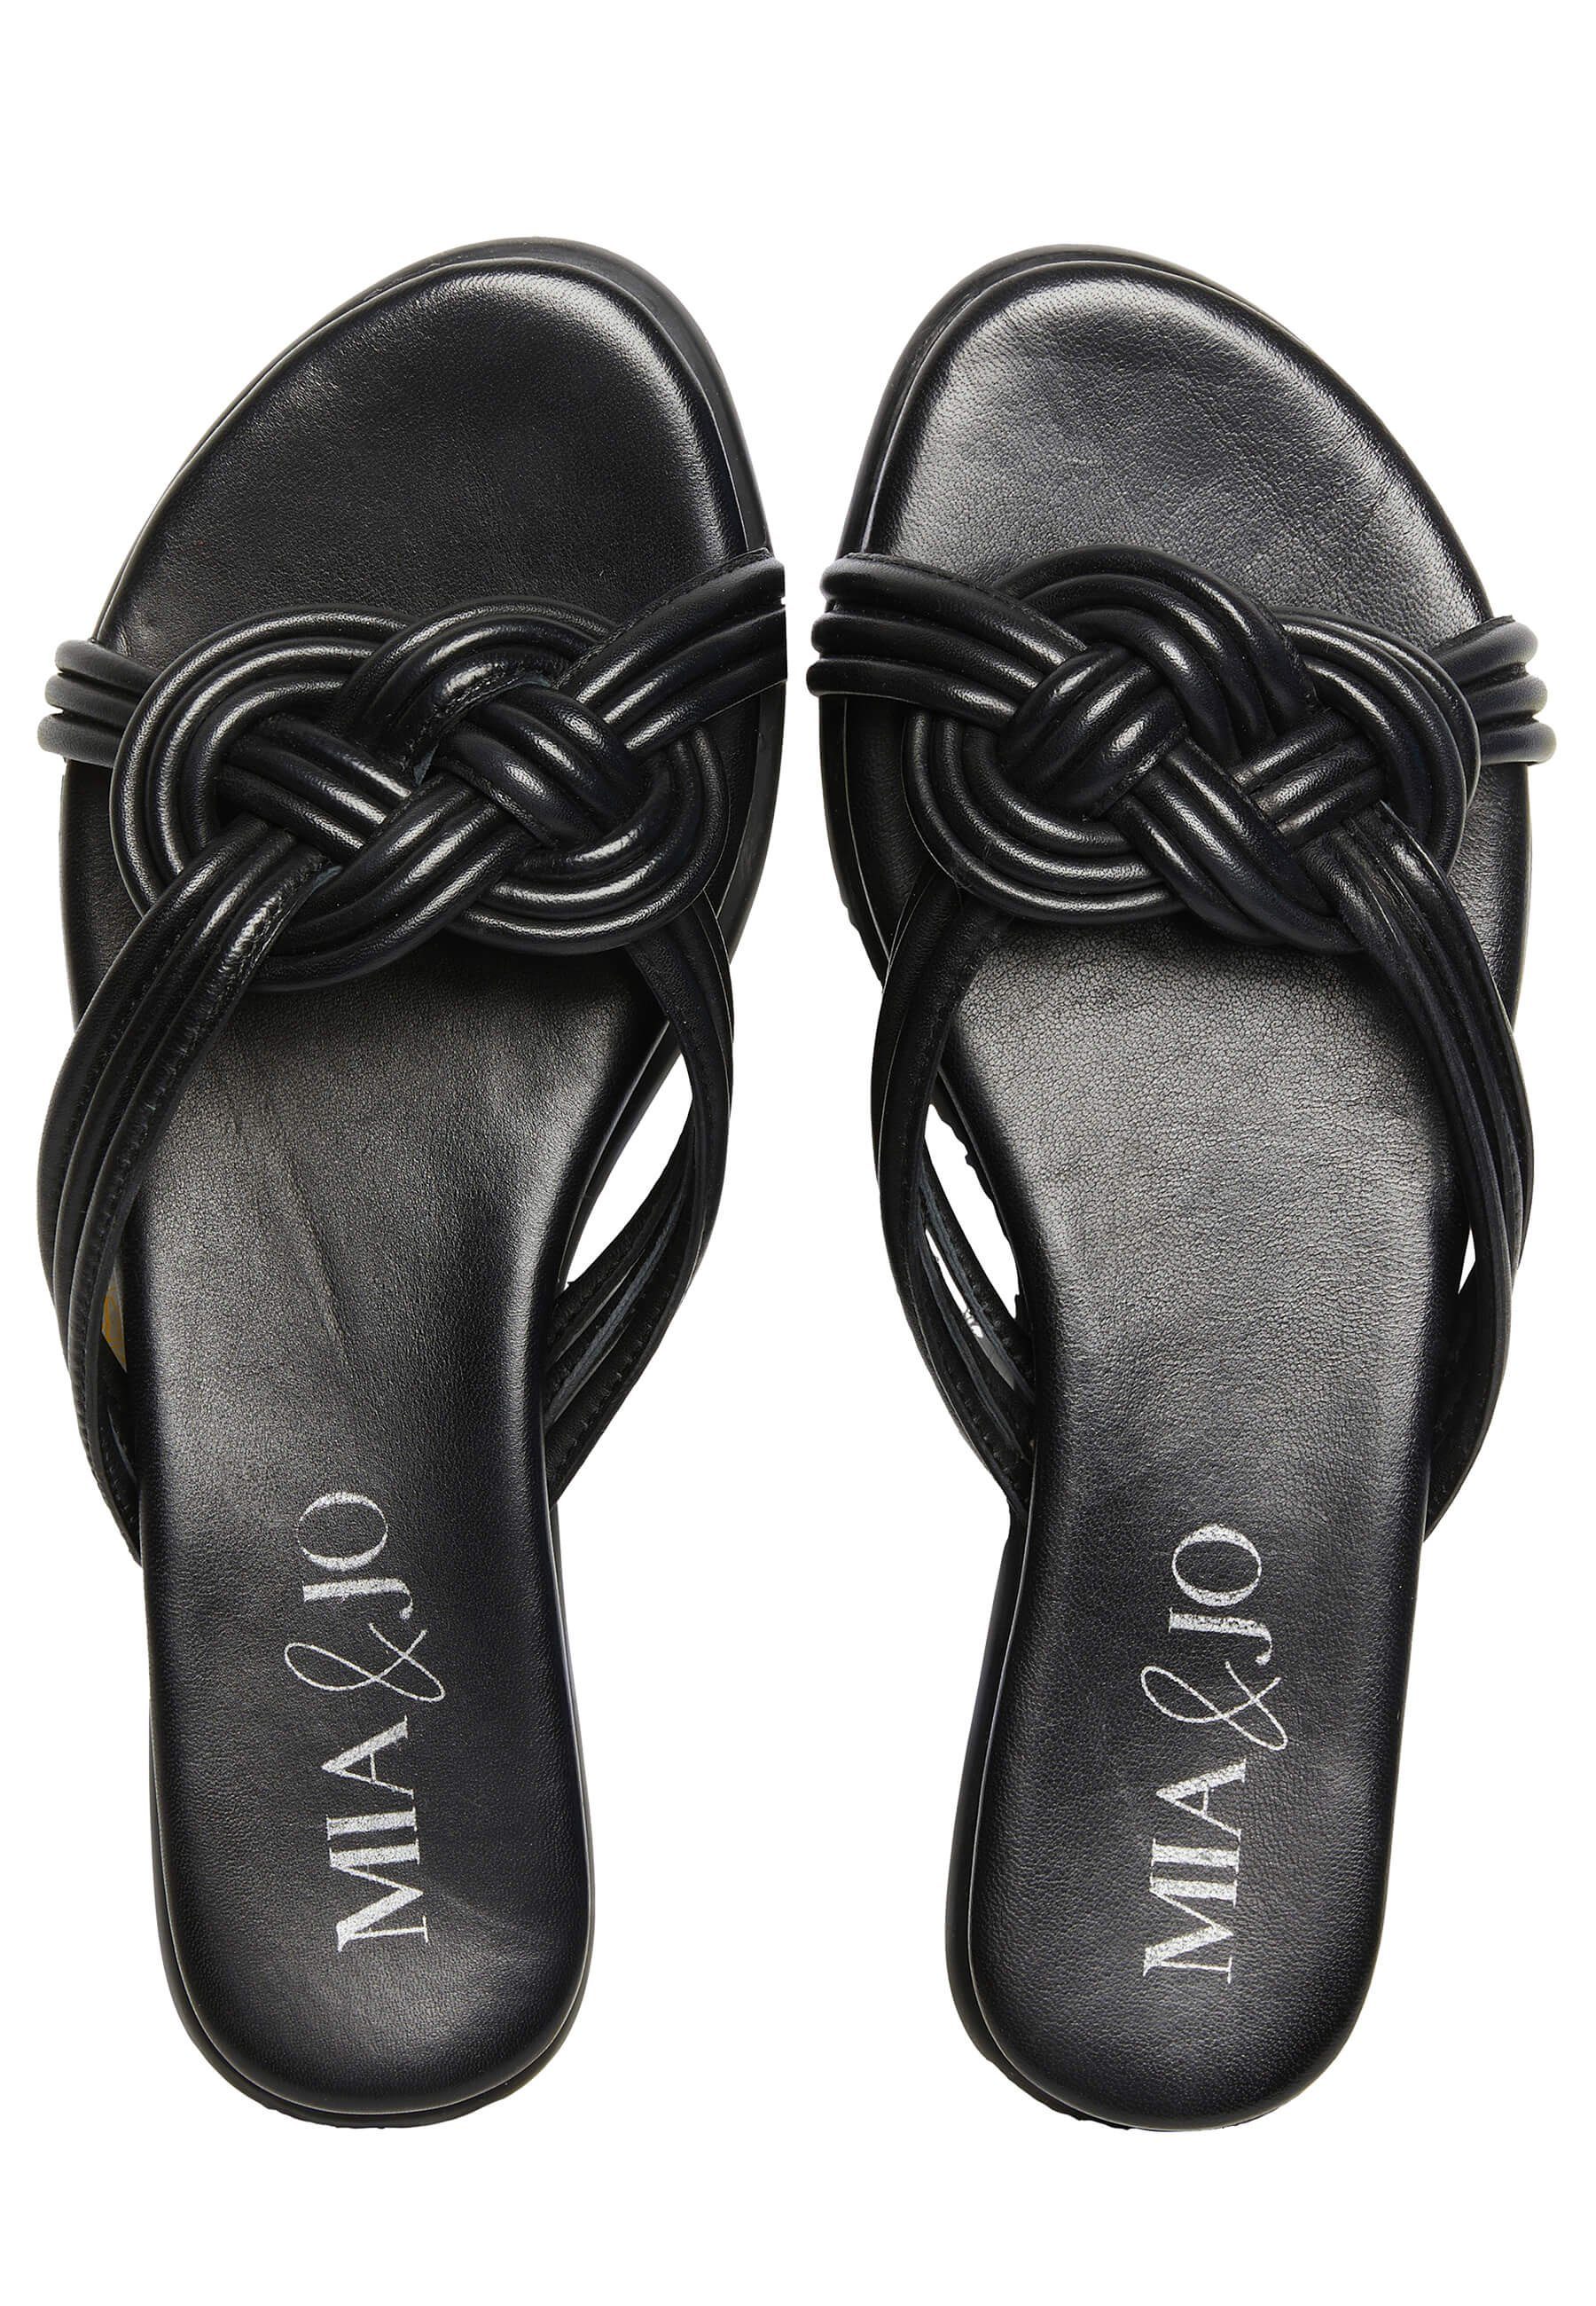 mia&jo Sandale Sandale Design mit modernem